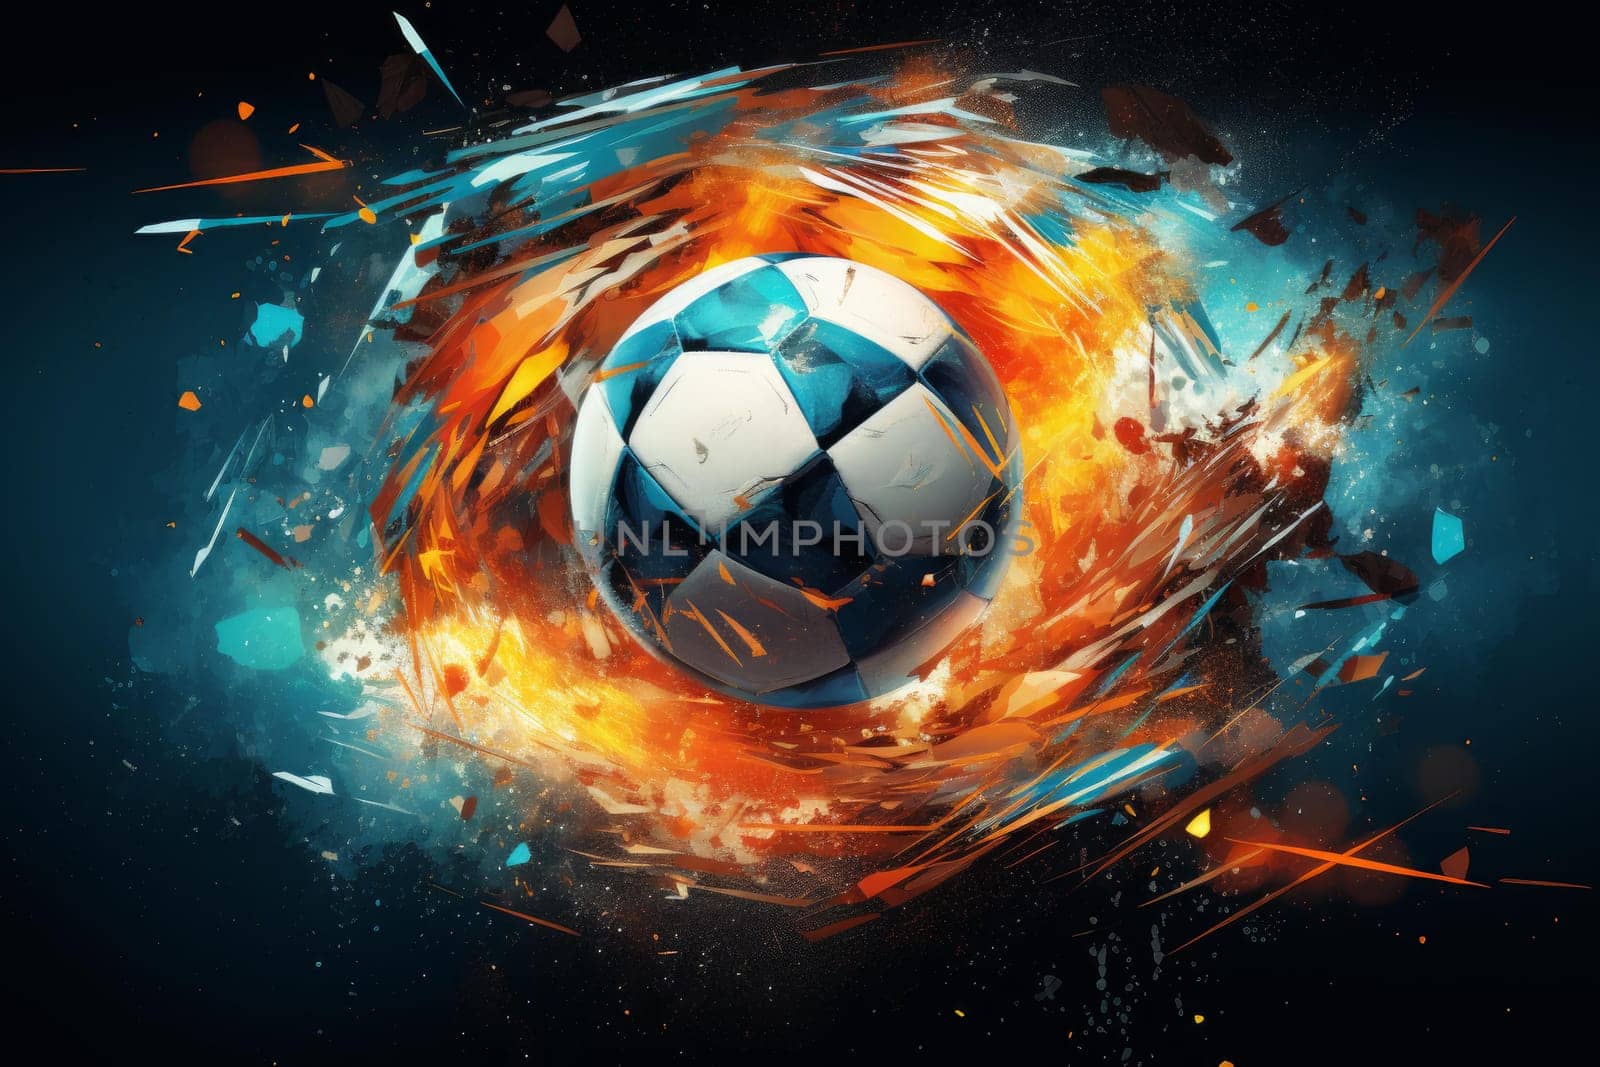 Stunning Soccer ball explosion. Goal fire. Generate Ai